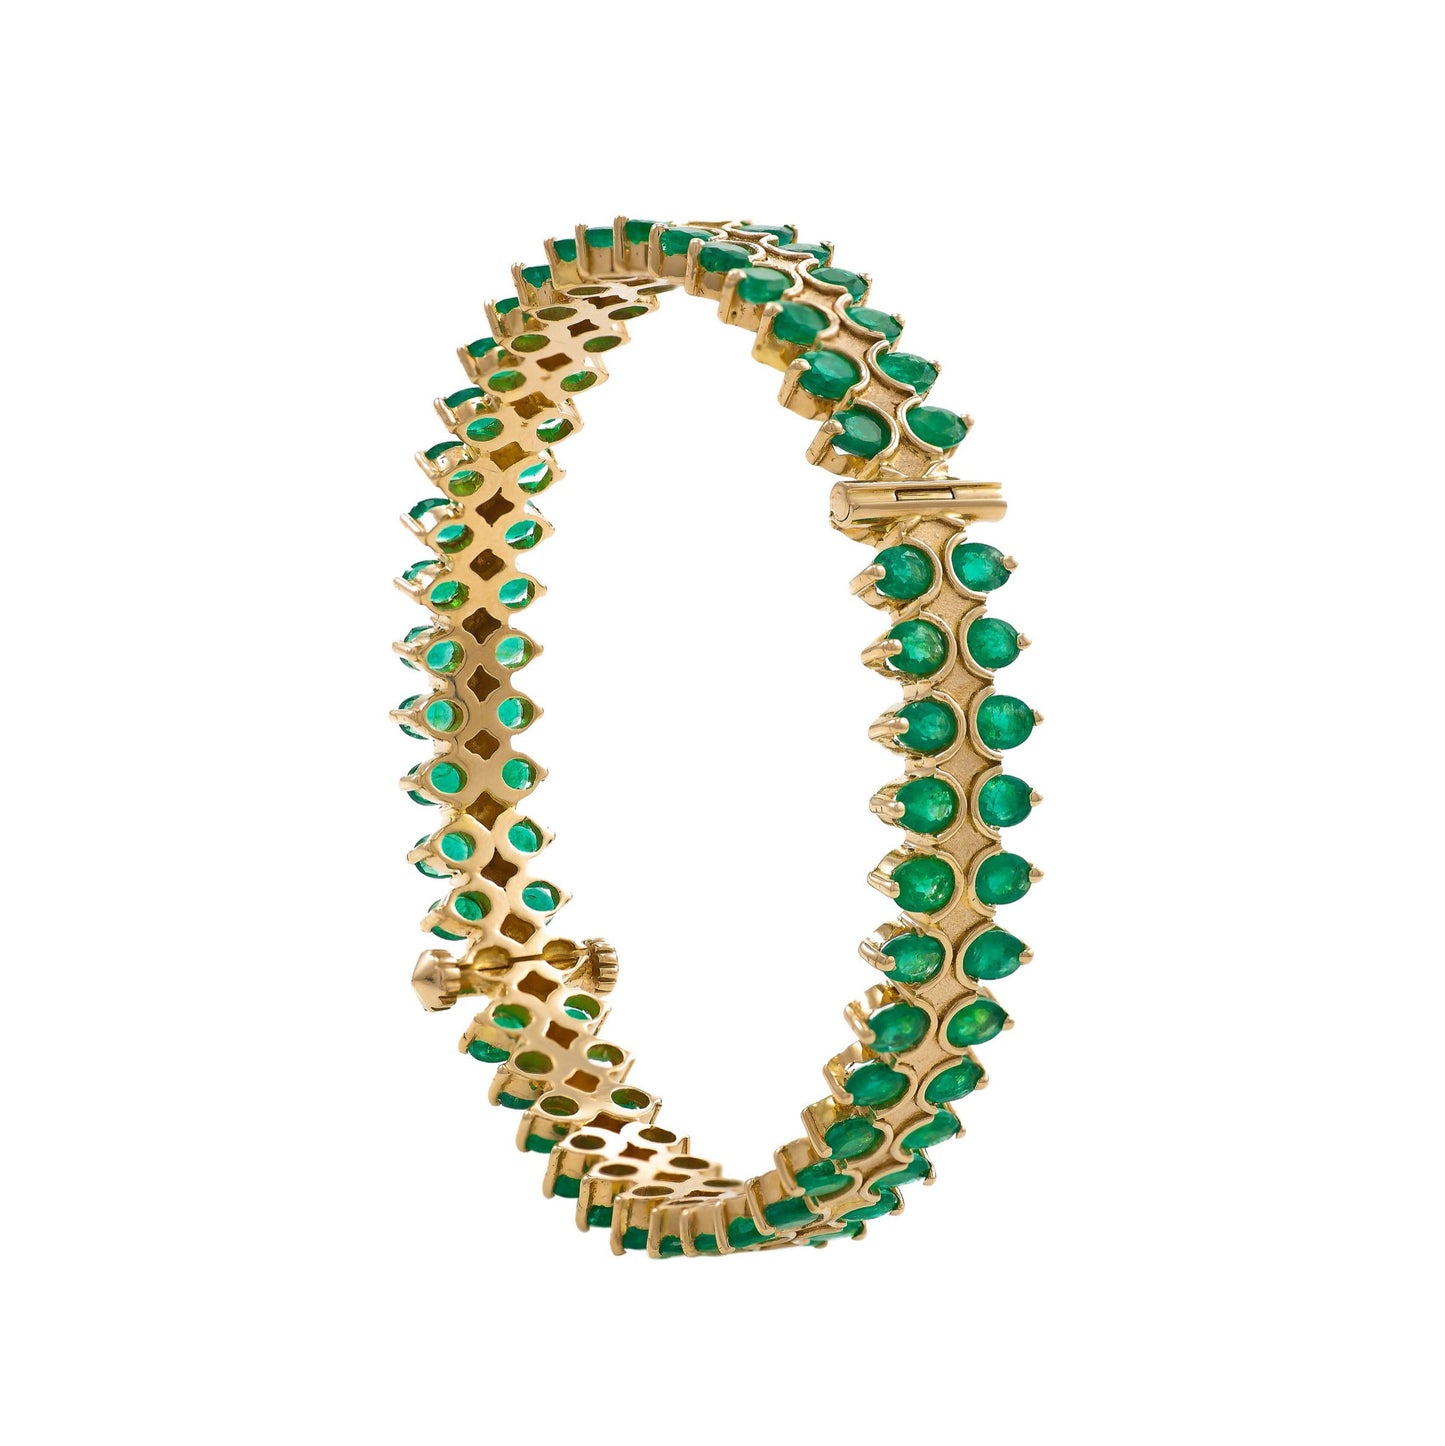 The Hansika Gold and Emerald Bangle by Rasvihar